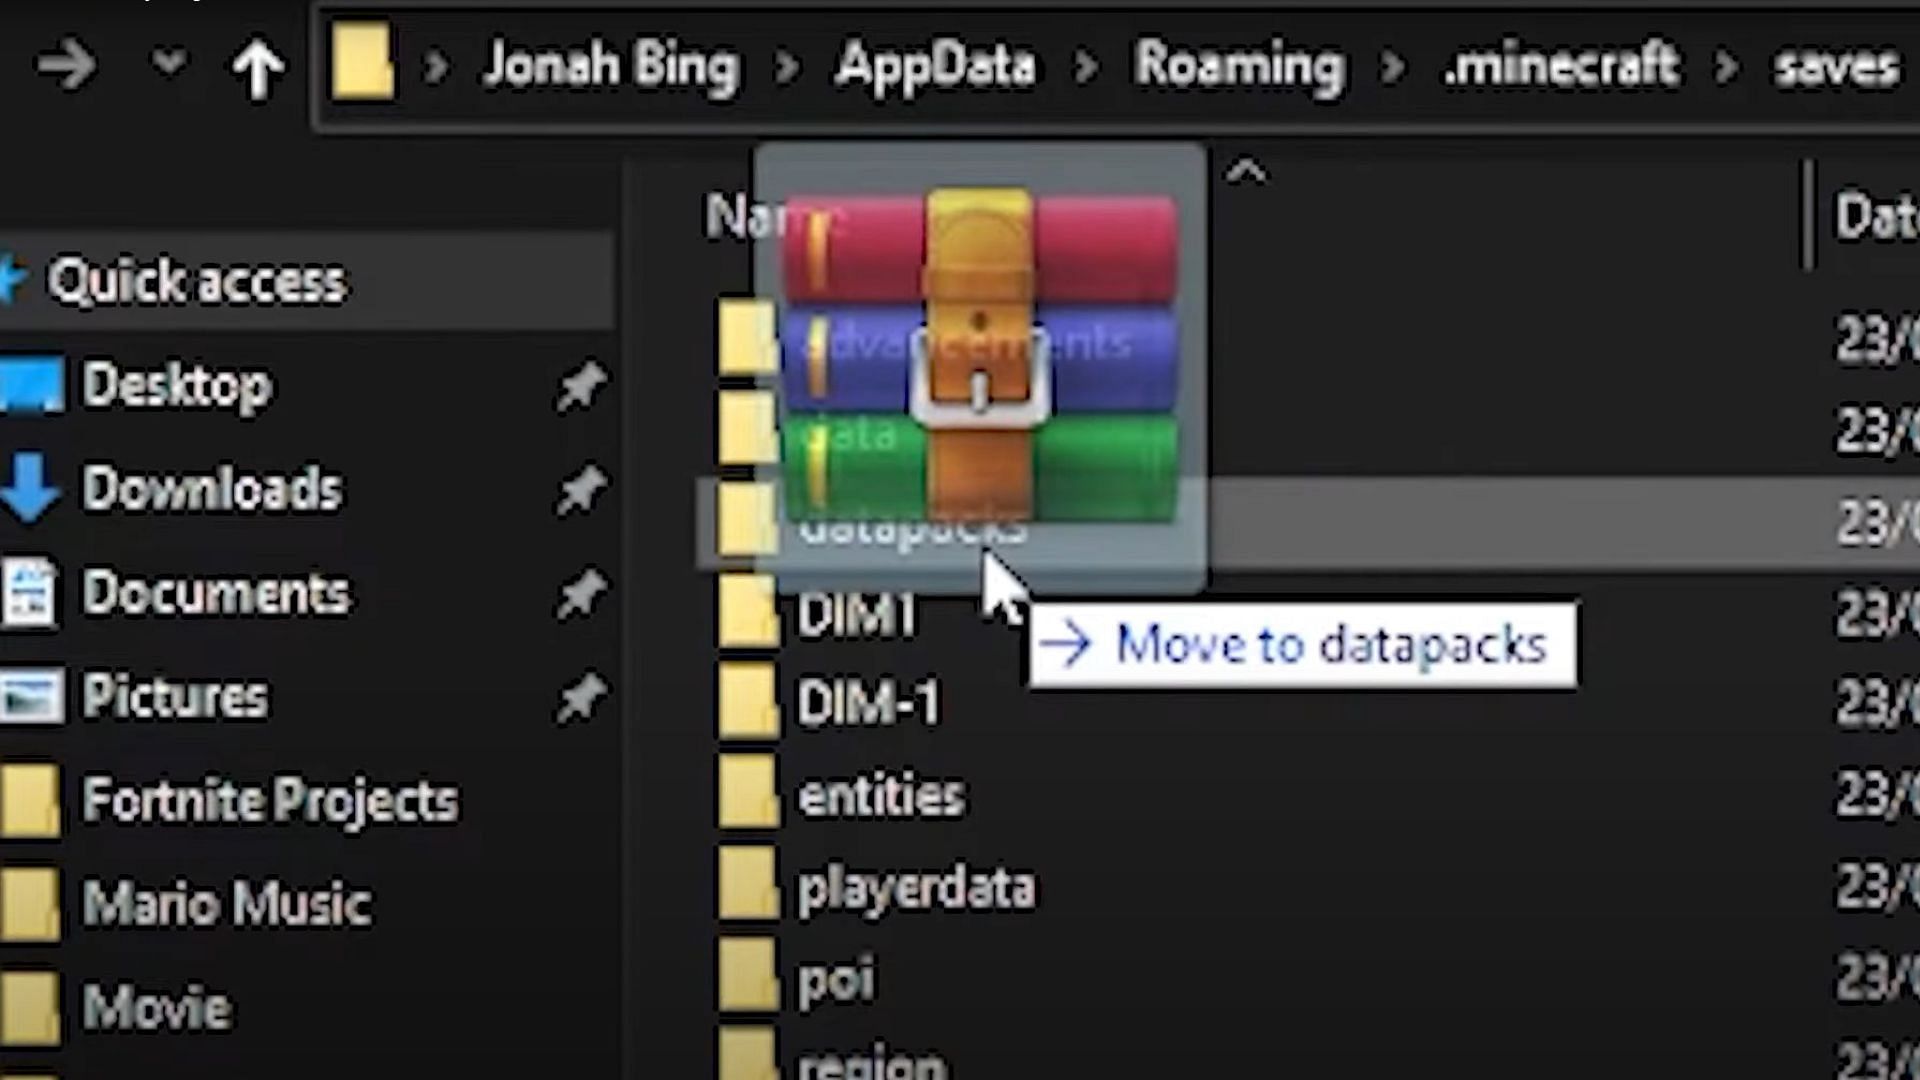 Moving the downloaded mural file to the datapacks folder (Image via Jeroo)